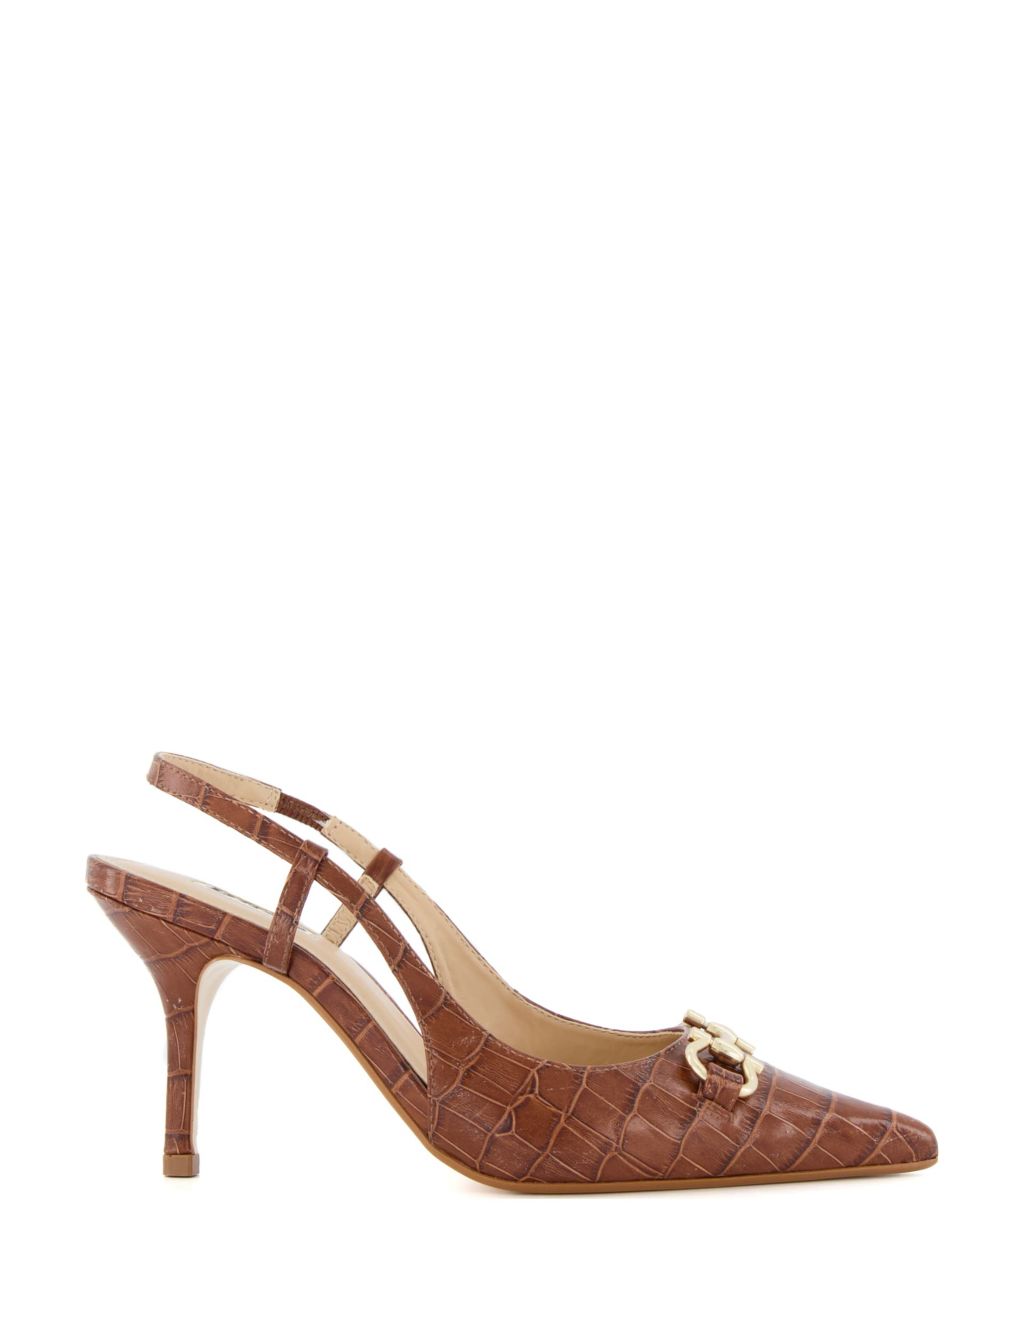 Leather Croc Stiletto Heel Slingback Shoes image 1